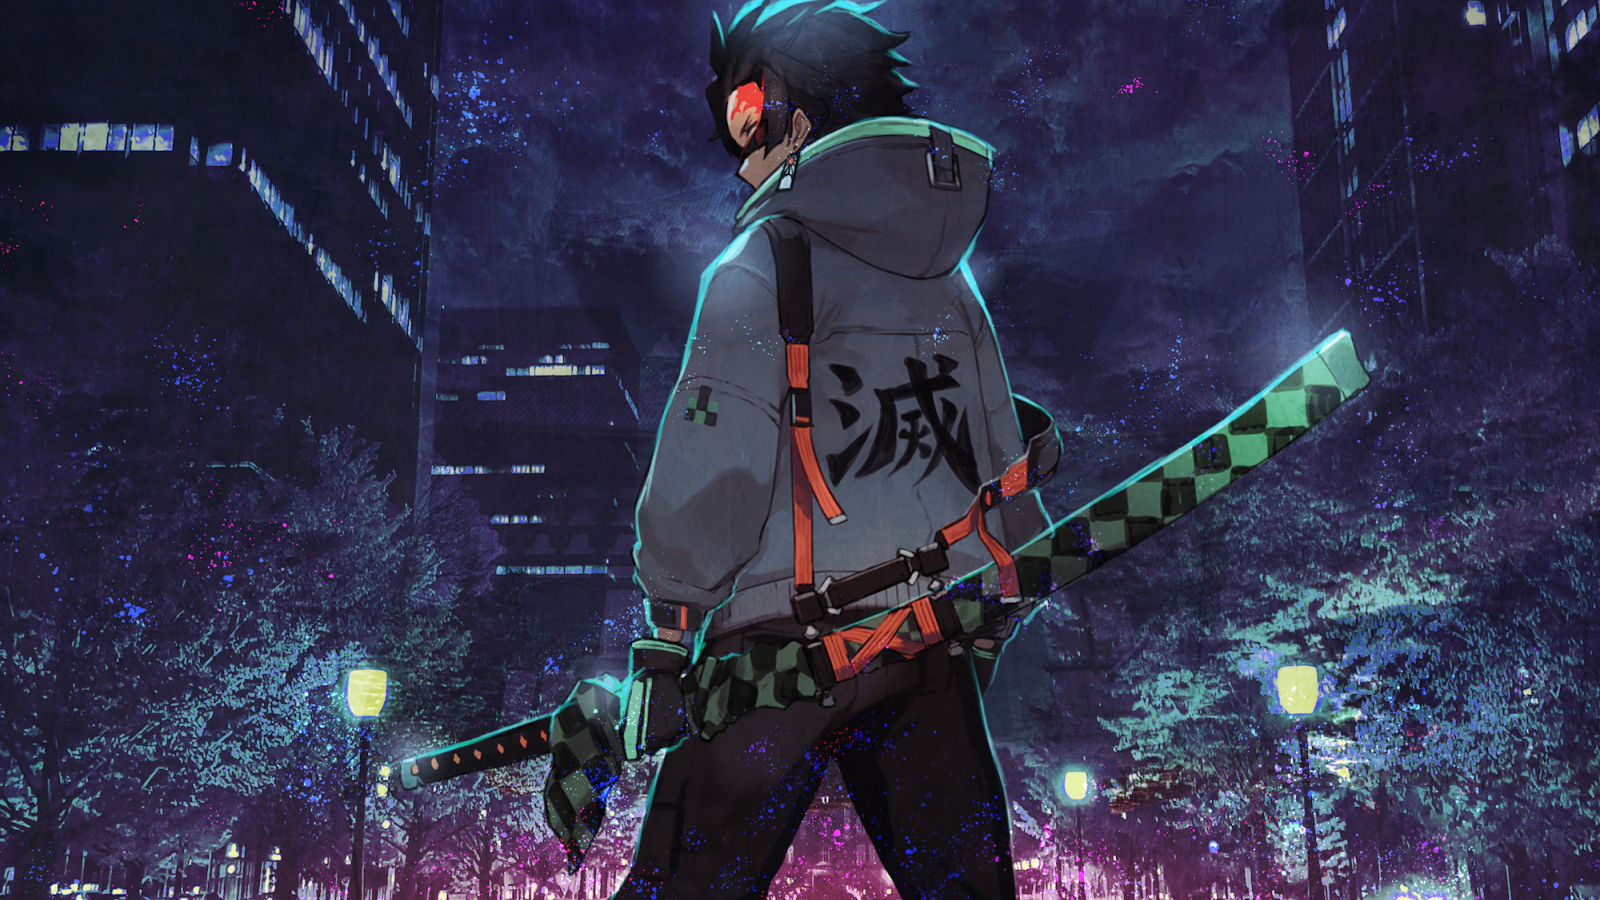 Anime Horizon Night Sky 4K wallpaper download